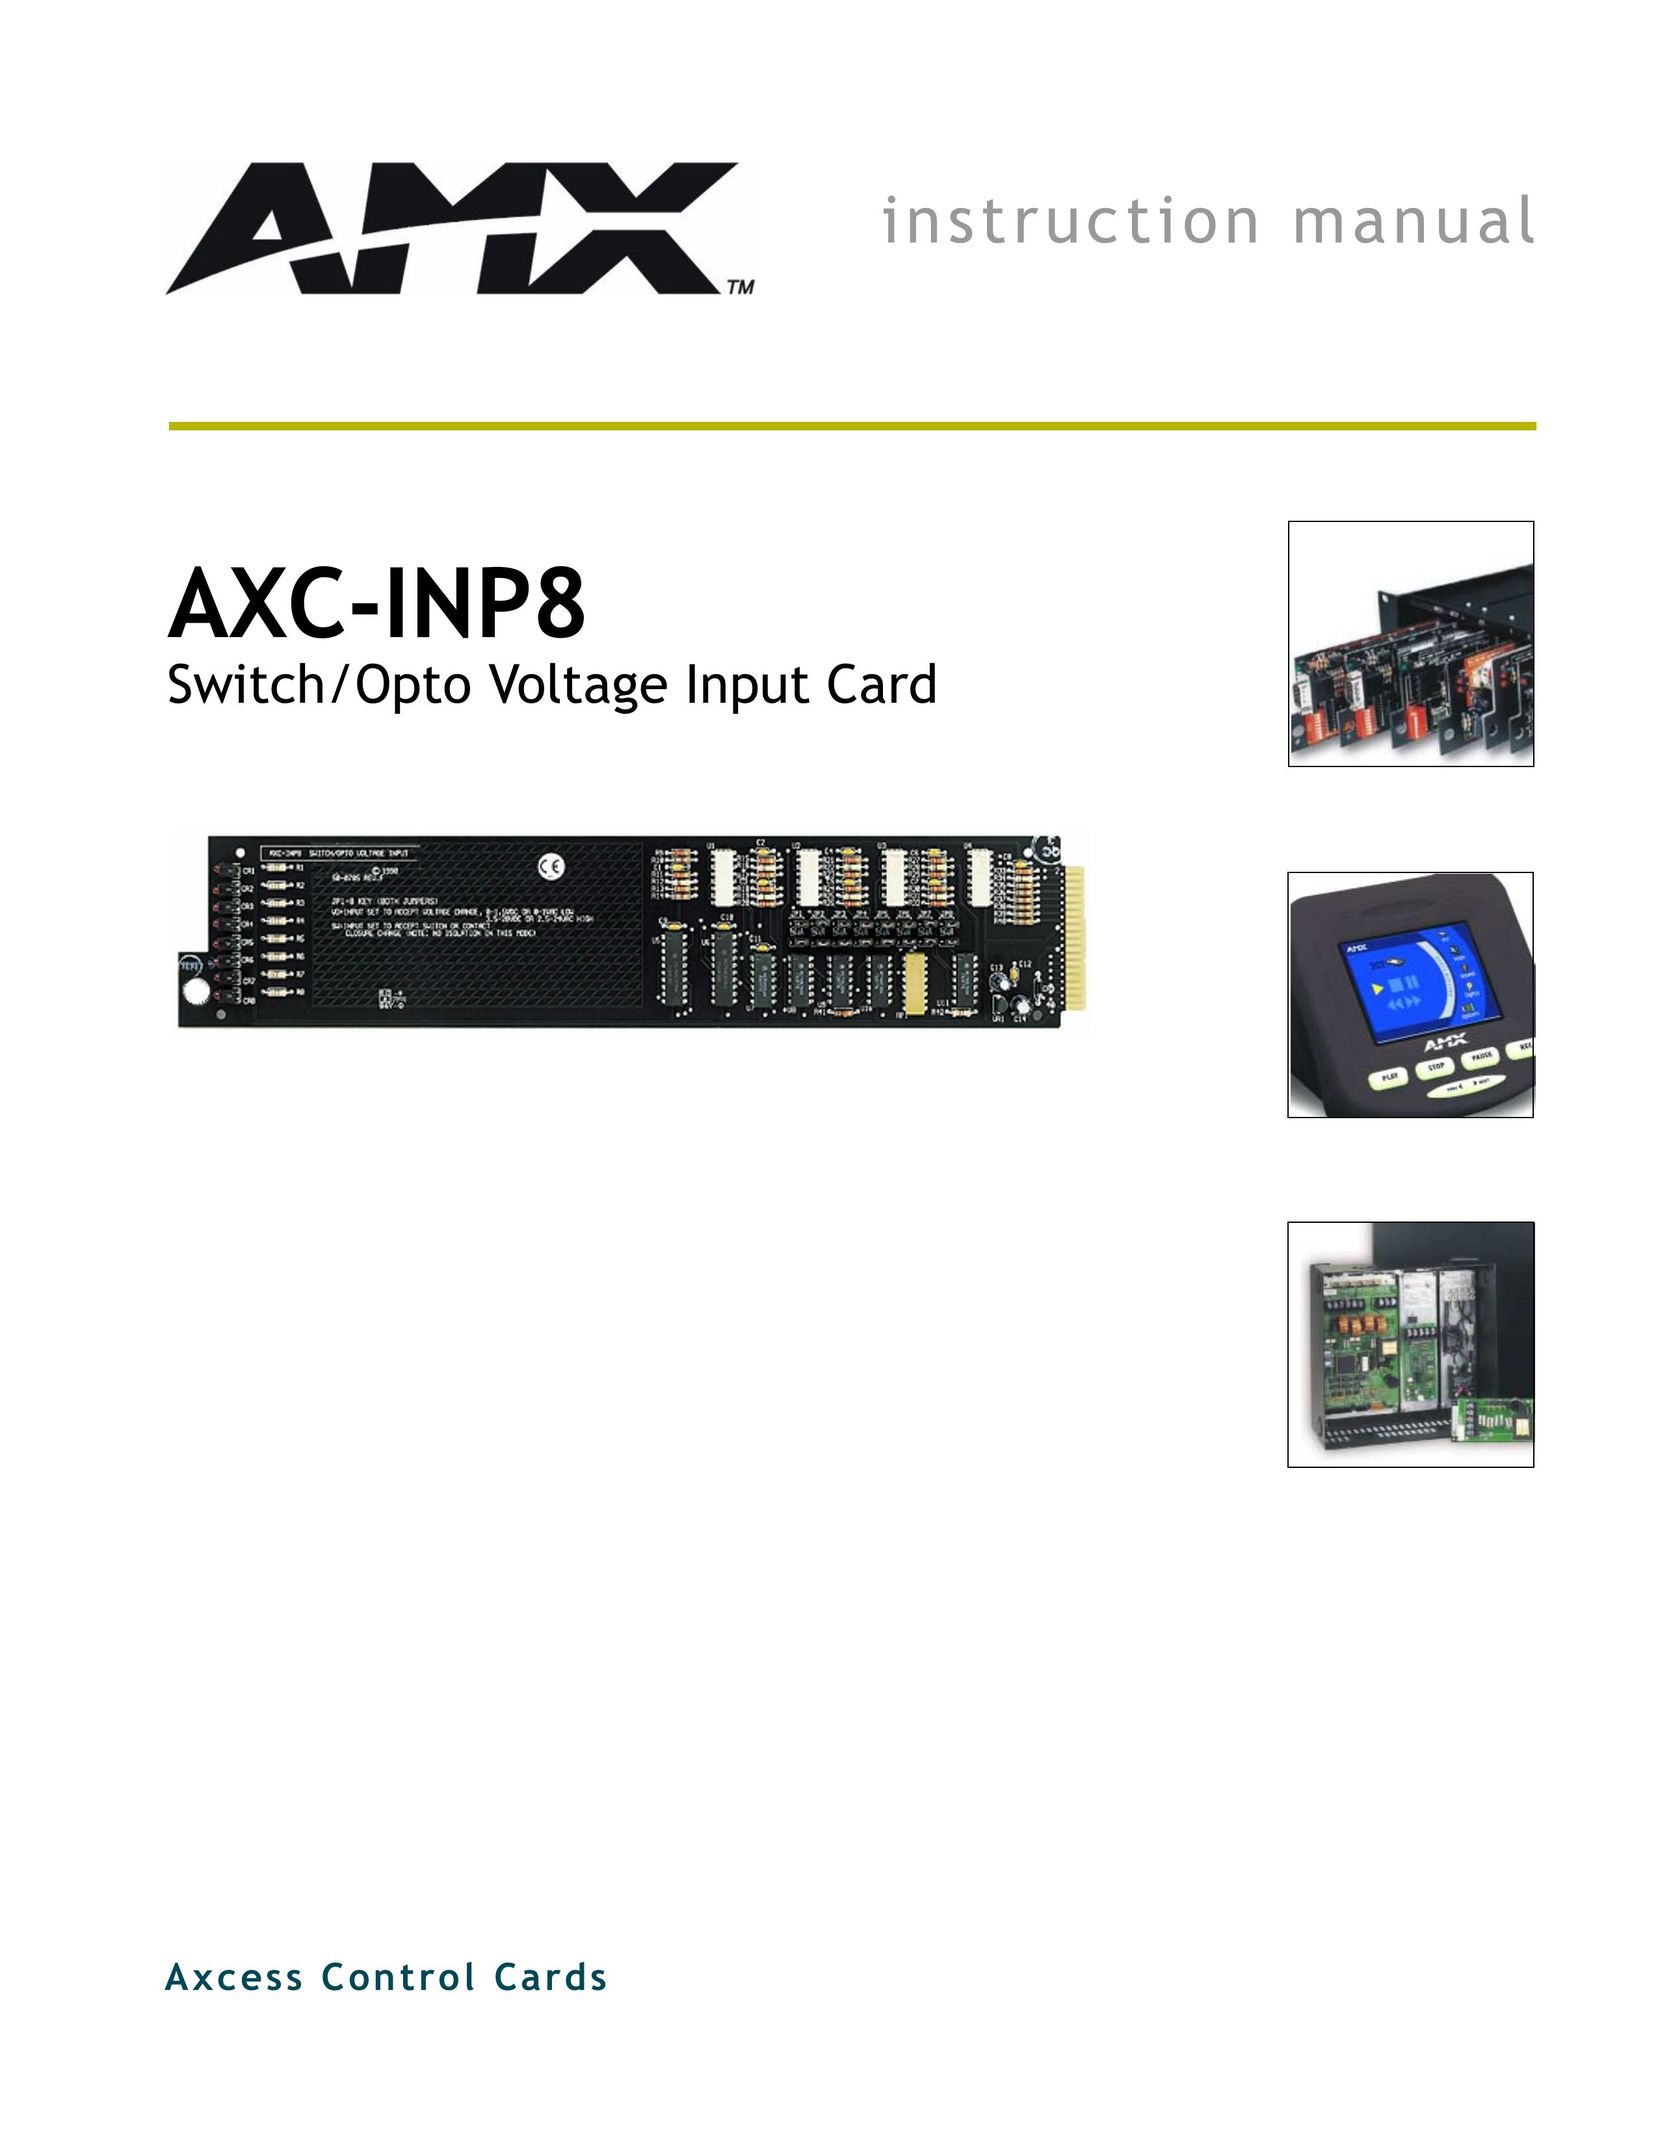 AMX AXC-INP8 Network Card User Manual